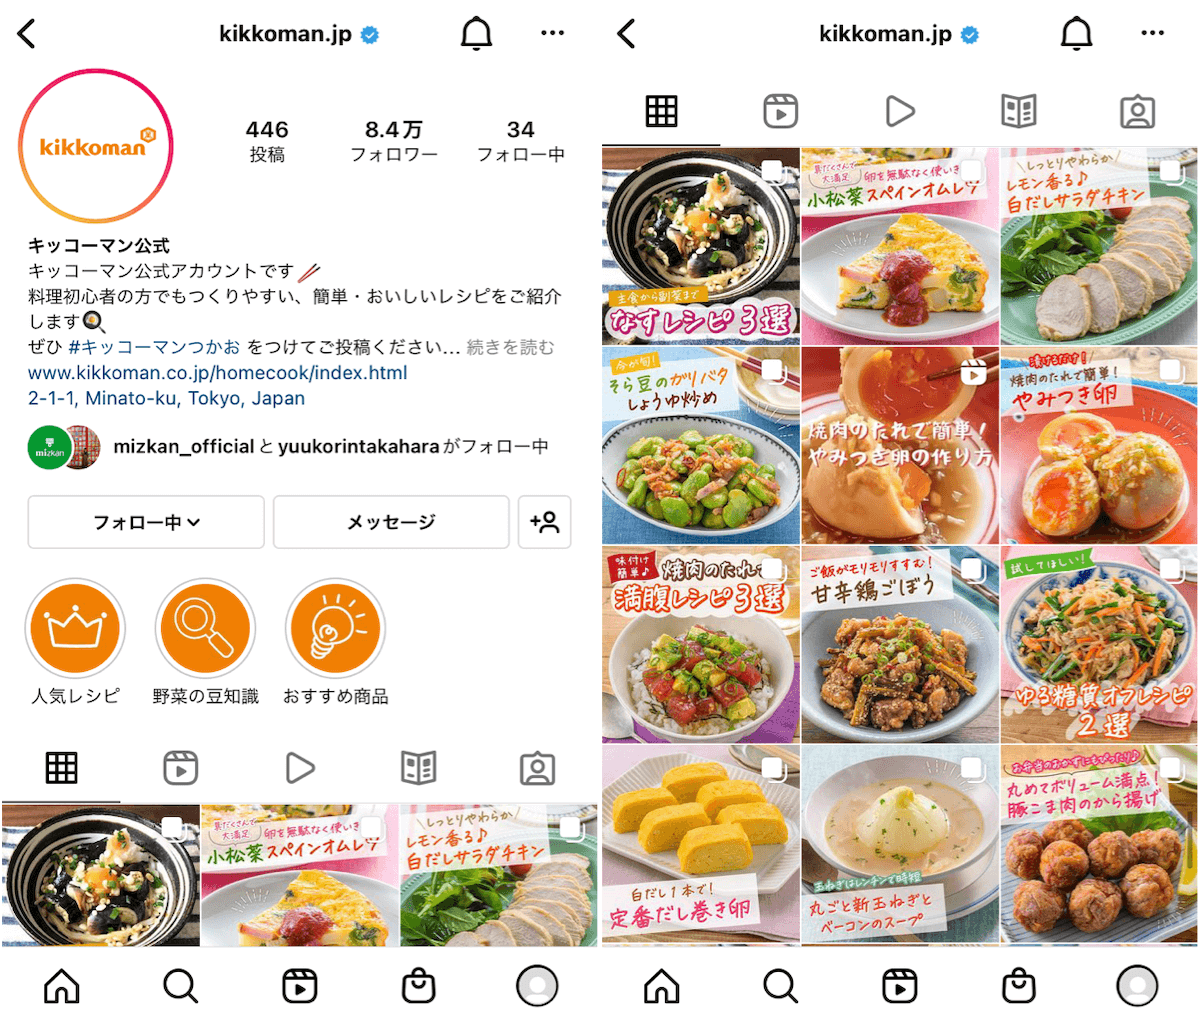 instagram-foods-official-kikkoman.jp